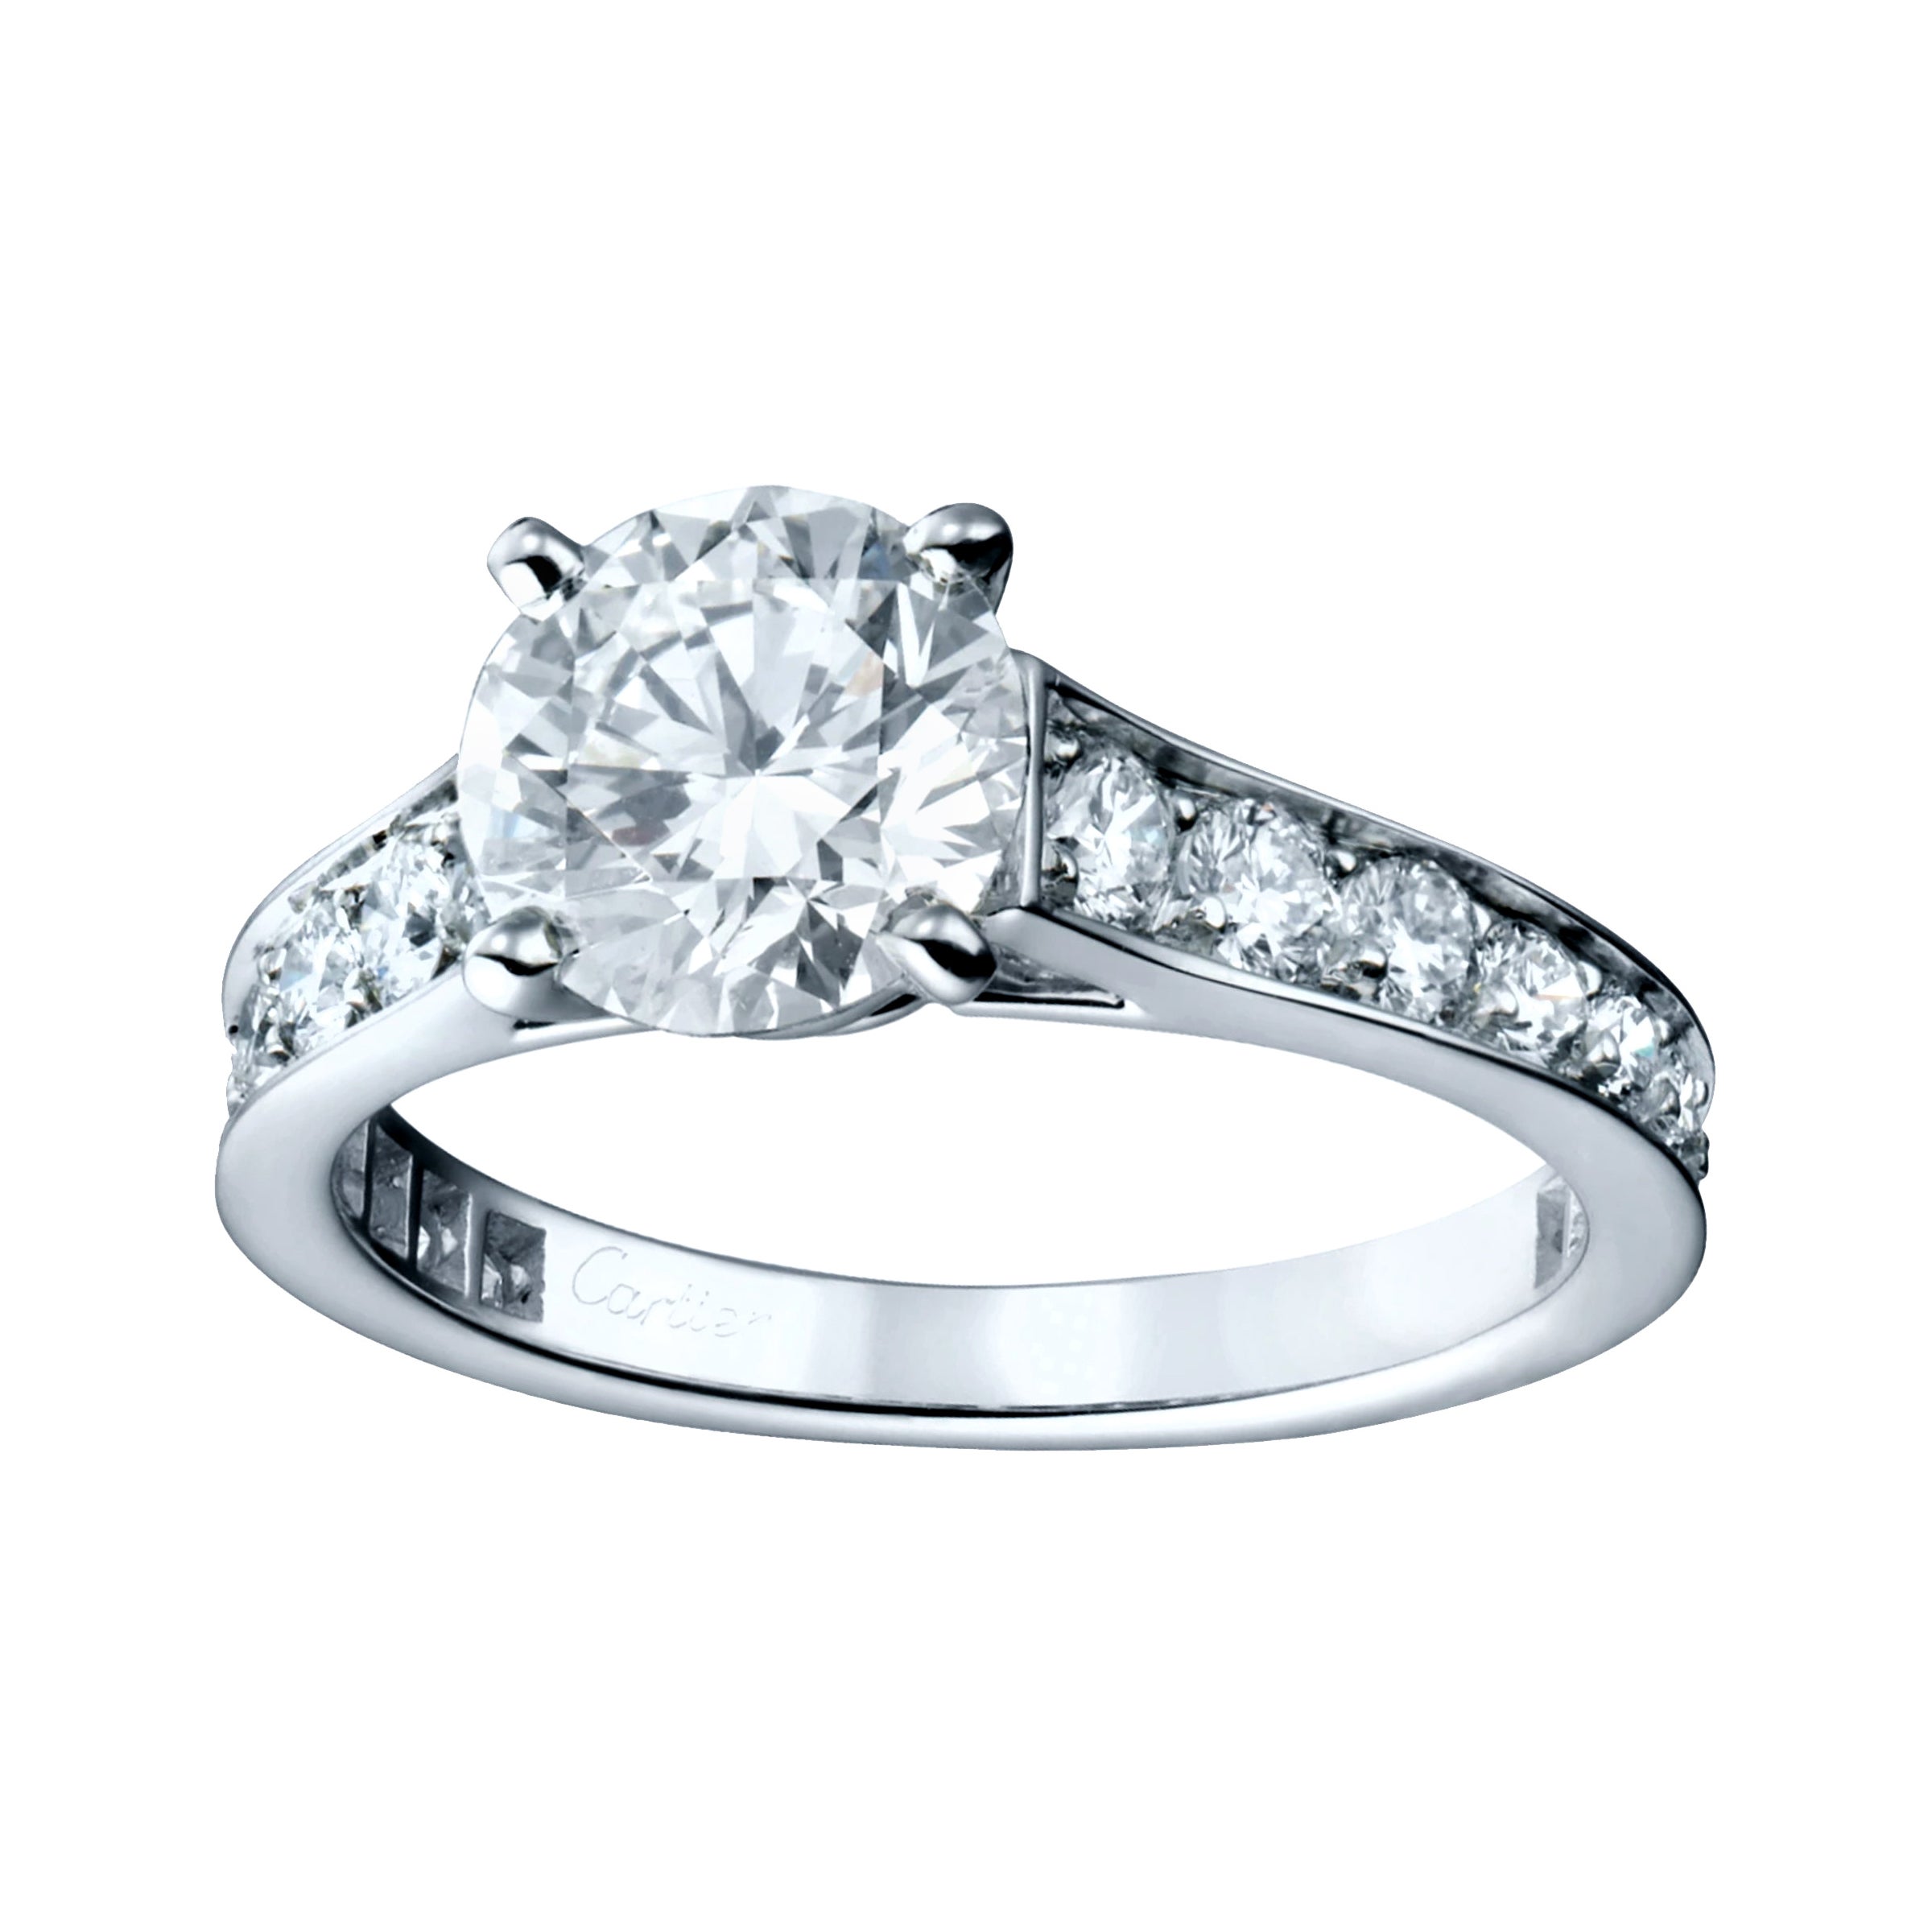 3 carat cartier engagement ring price